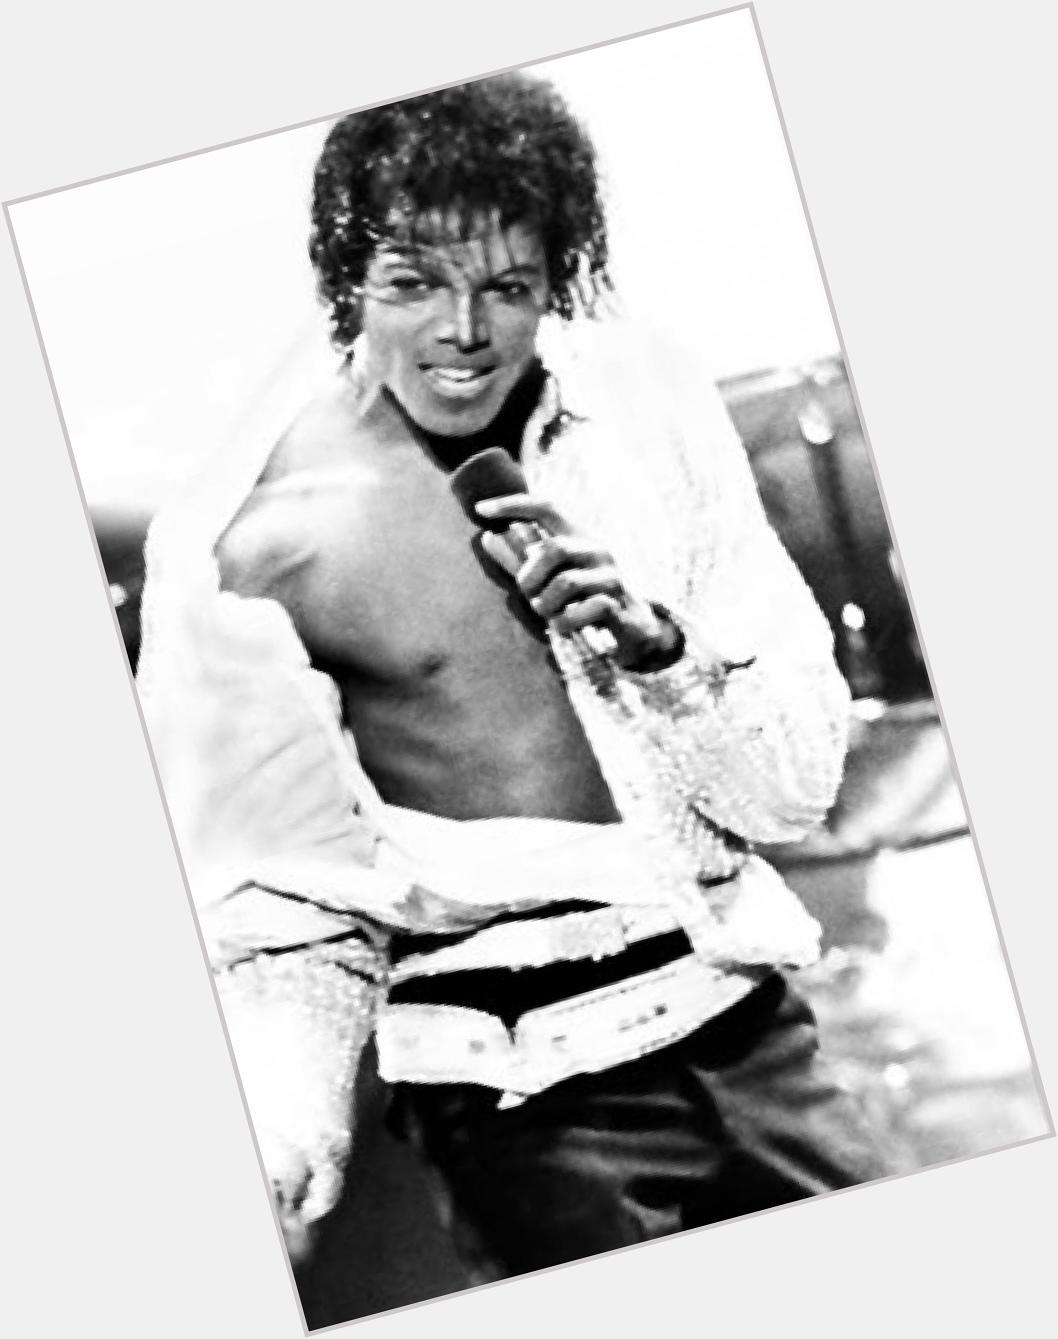 Http://fanpagepress.net/m/P/Prince Michael Jackson Exclusive Hot Pic 3